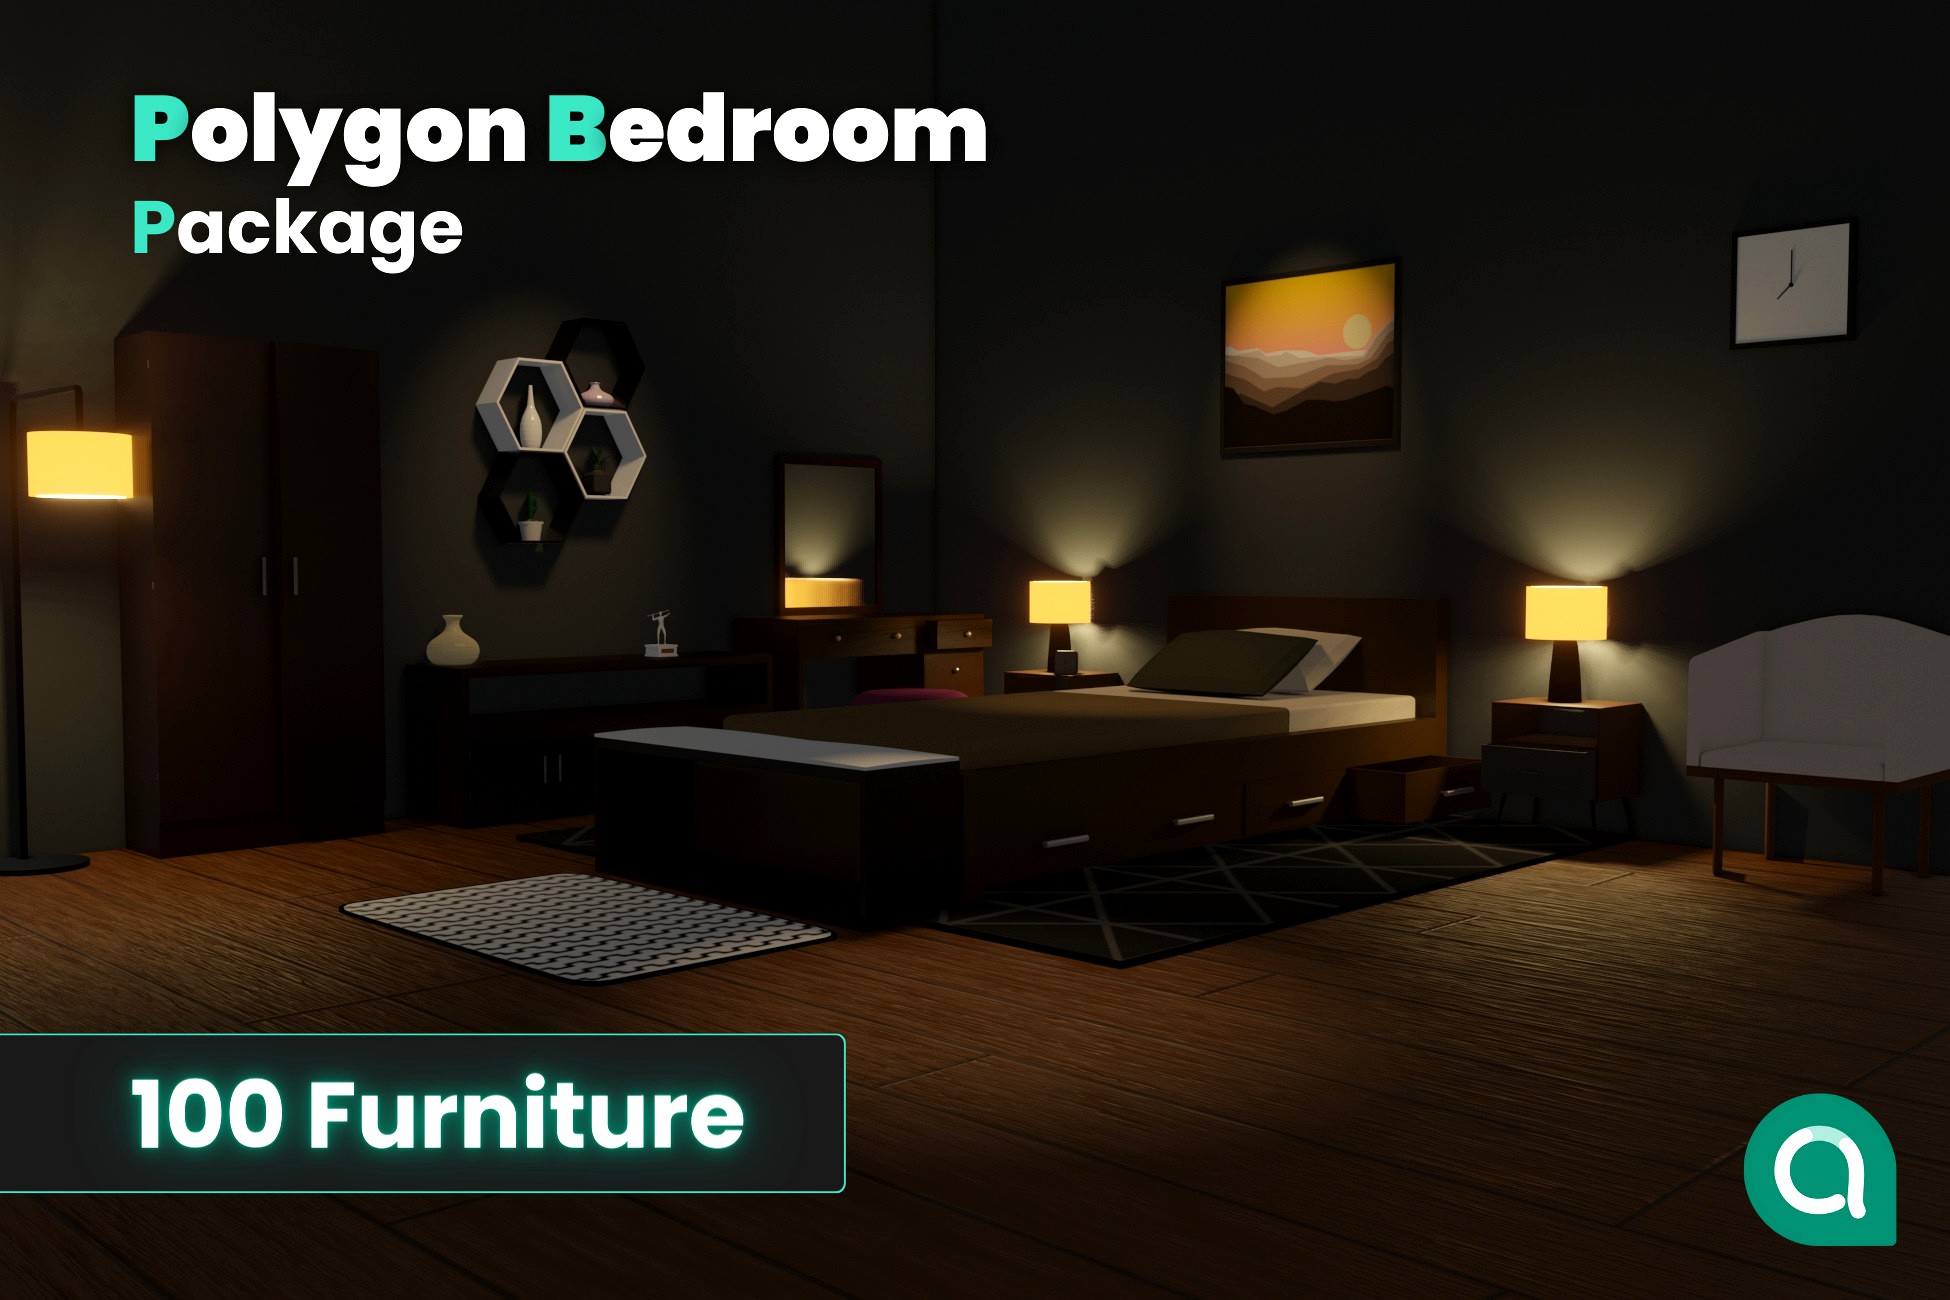 Polygon Bedroom Package